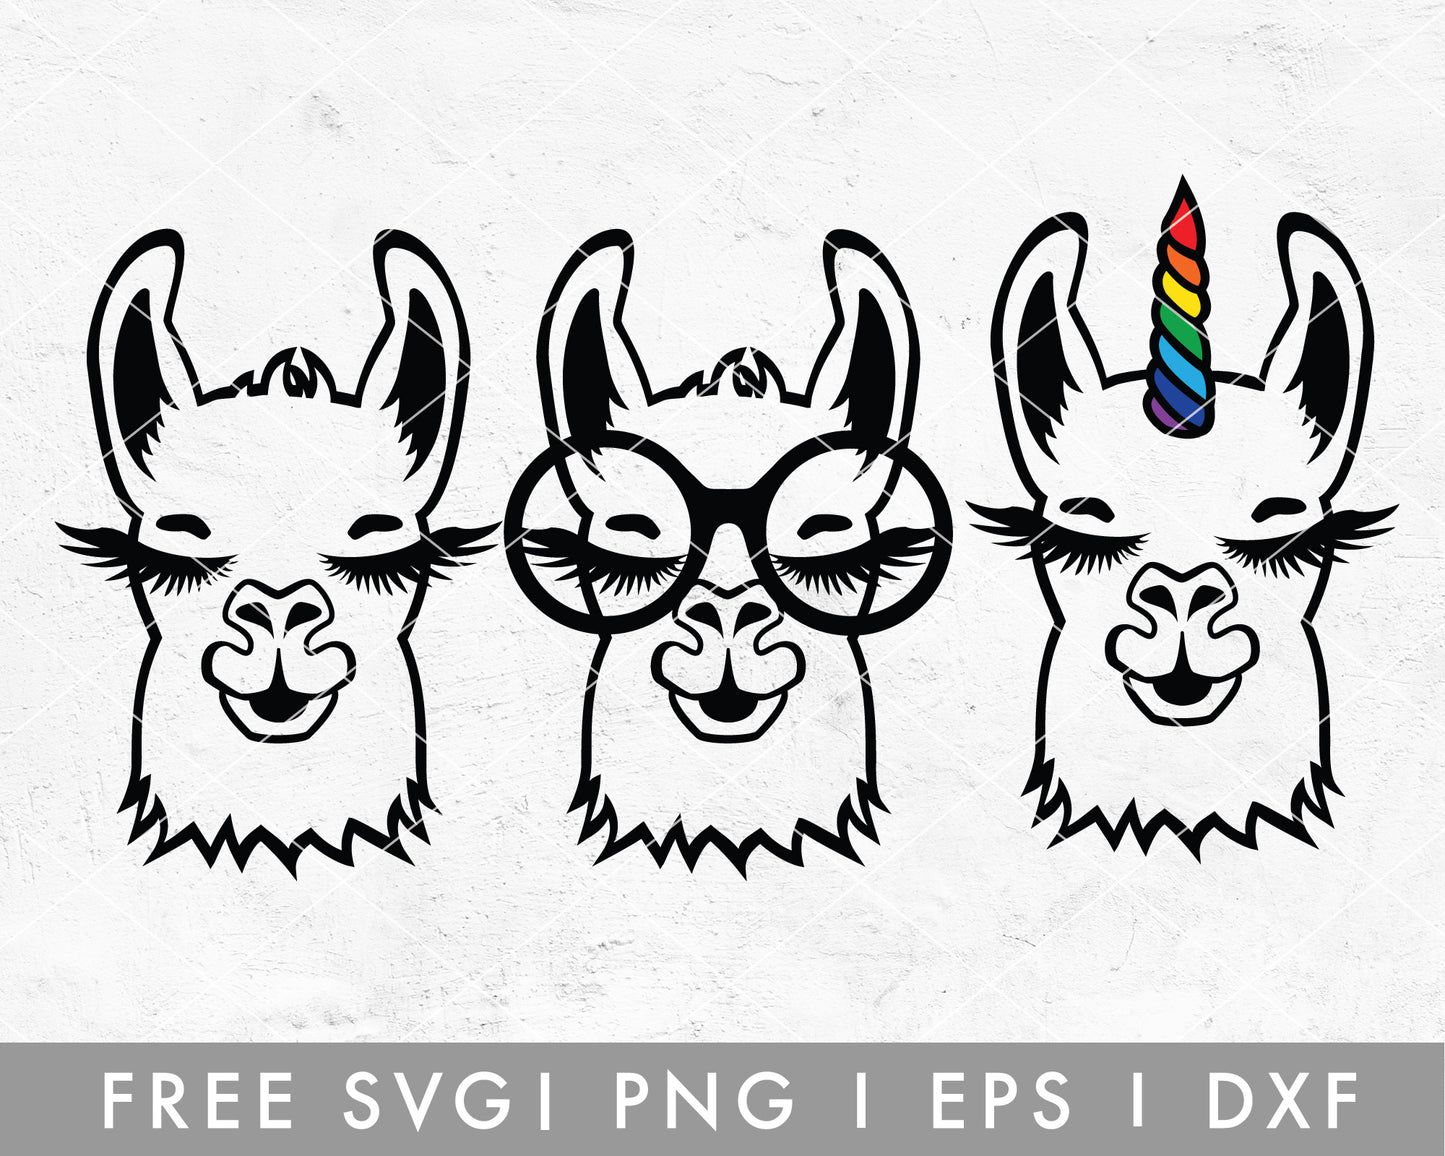 FREE FREE Unicorn SVG | Llamacorn Cut File for Cricut, Cameo Silhouette | Free SVG Cut File